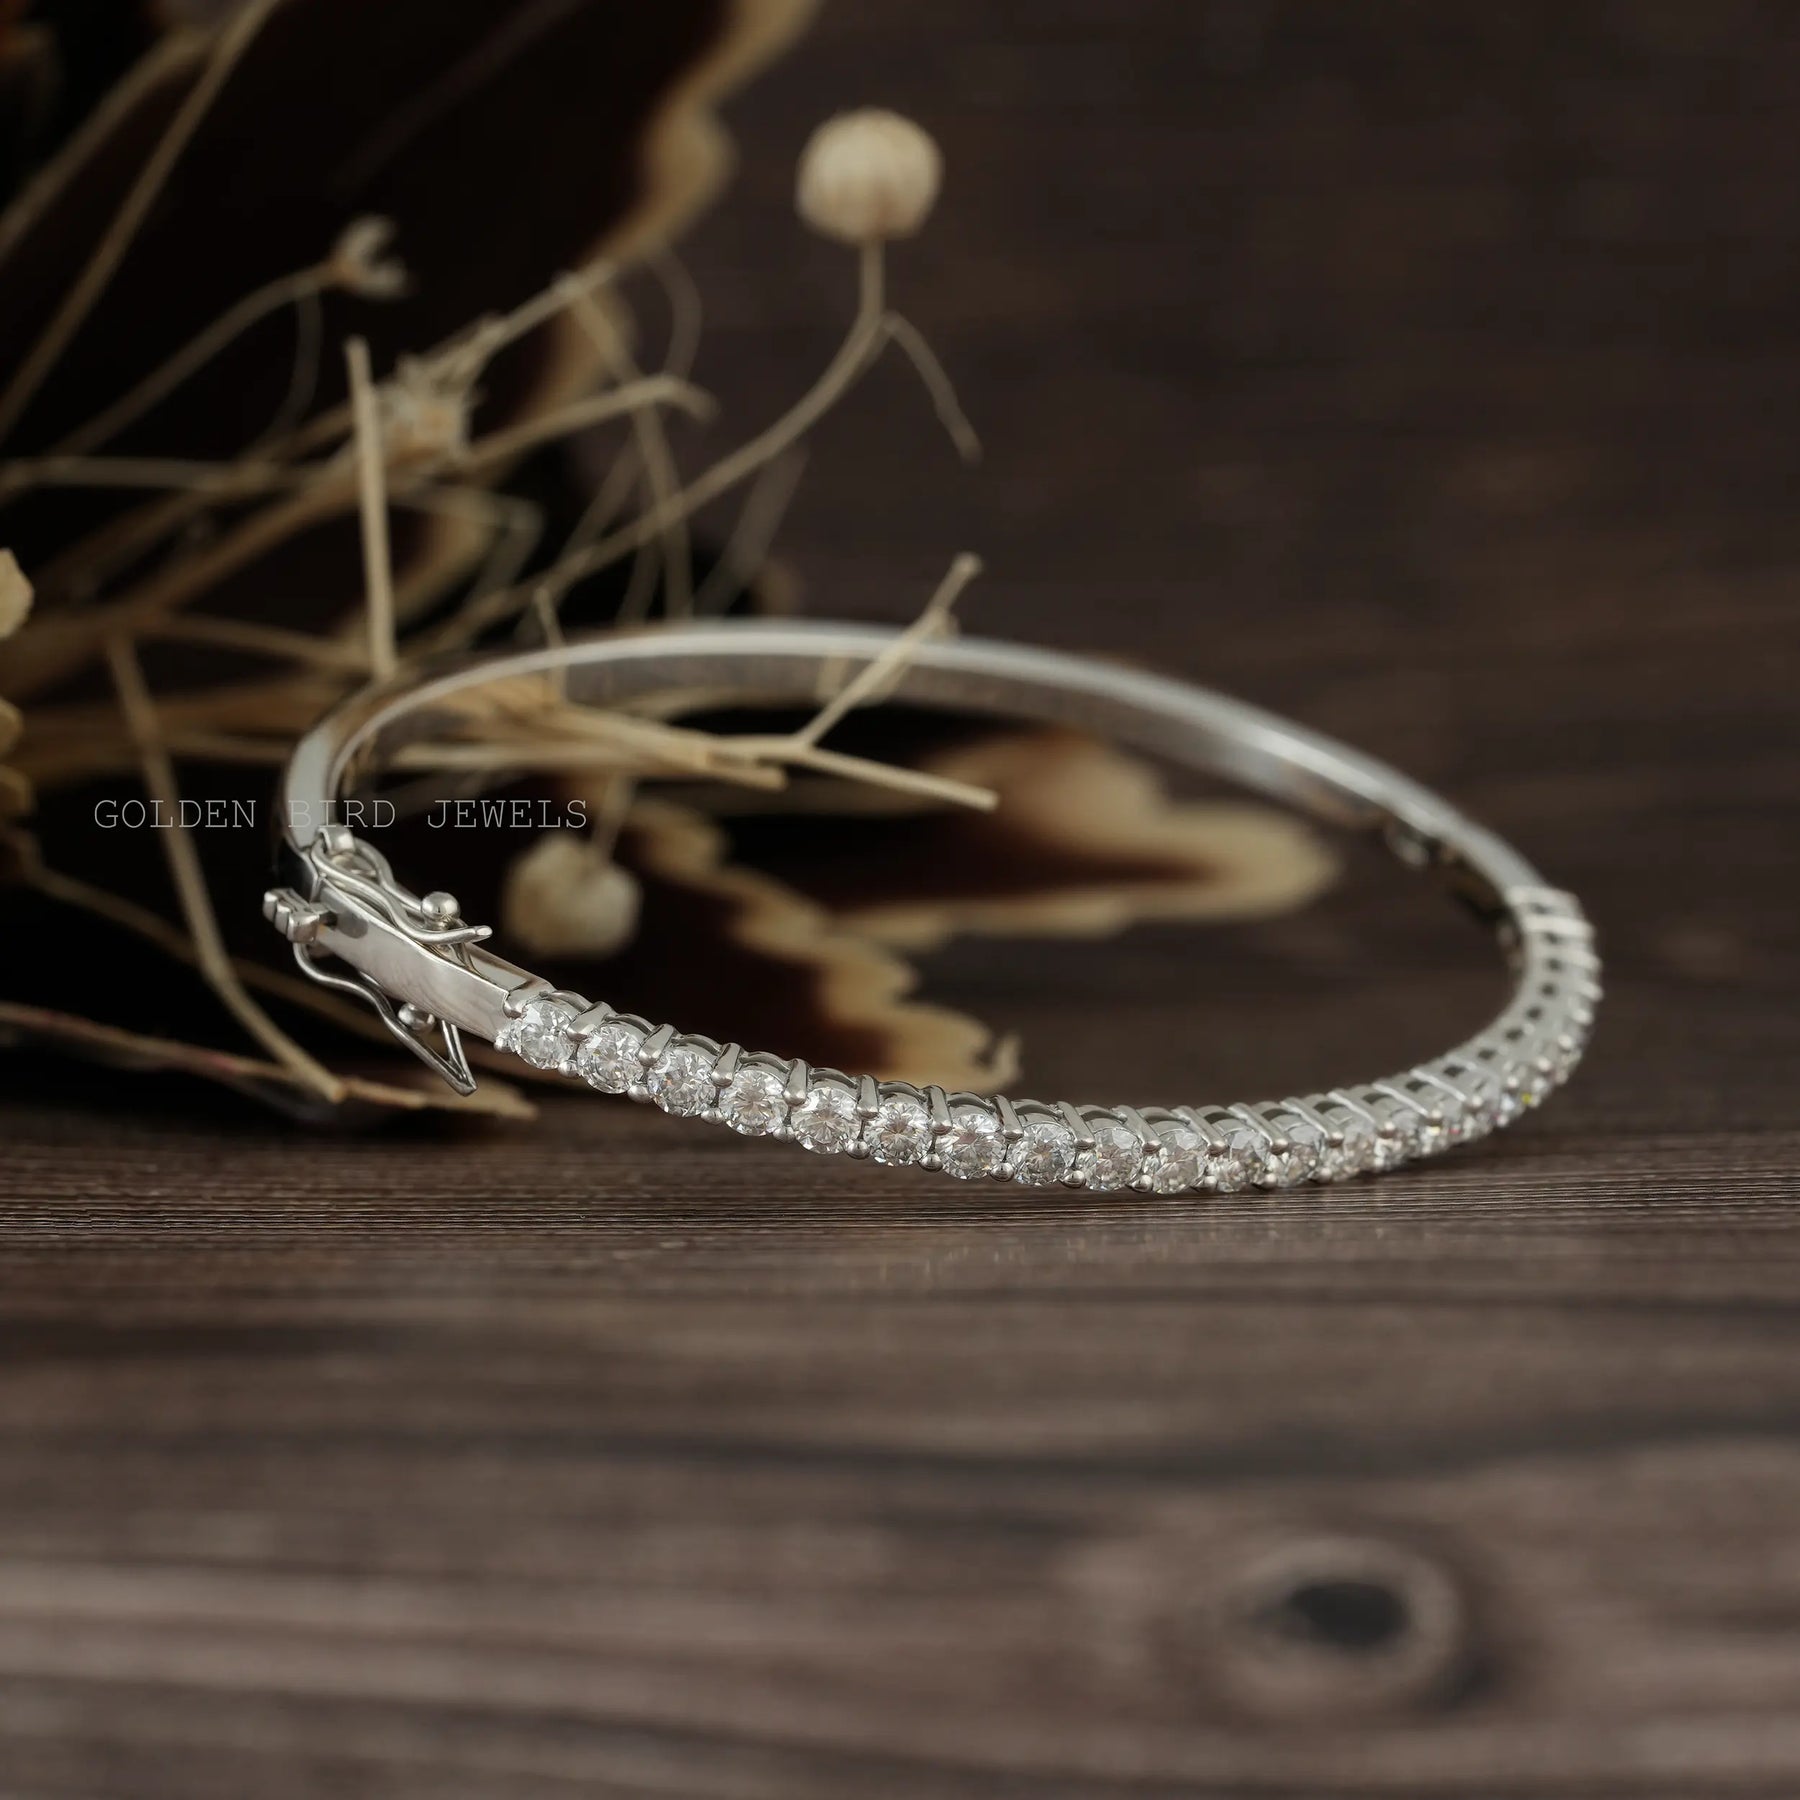 [This bracelet made of round cut stones]-[Golden Bird Jewels]